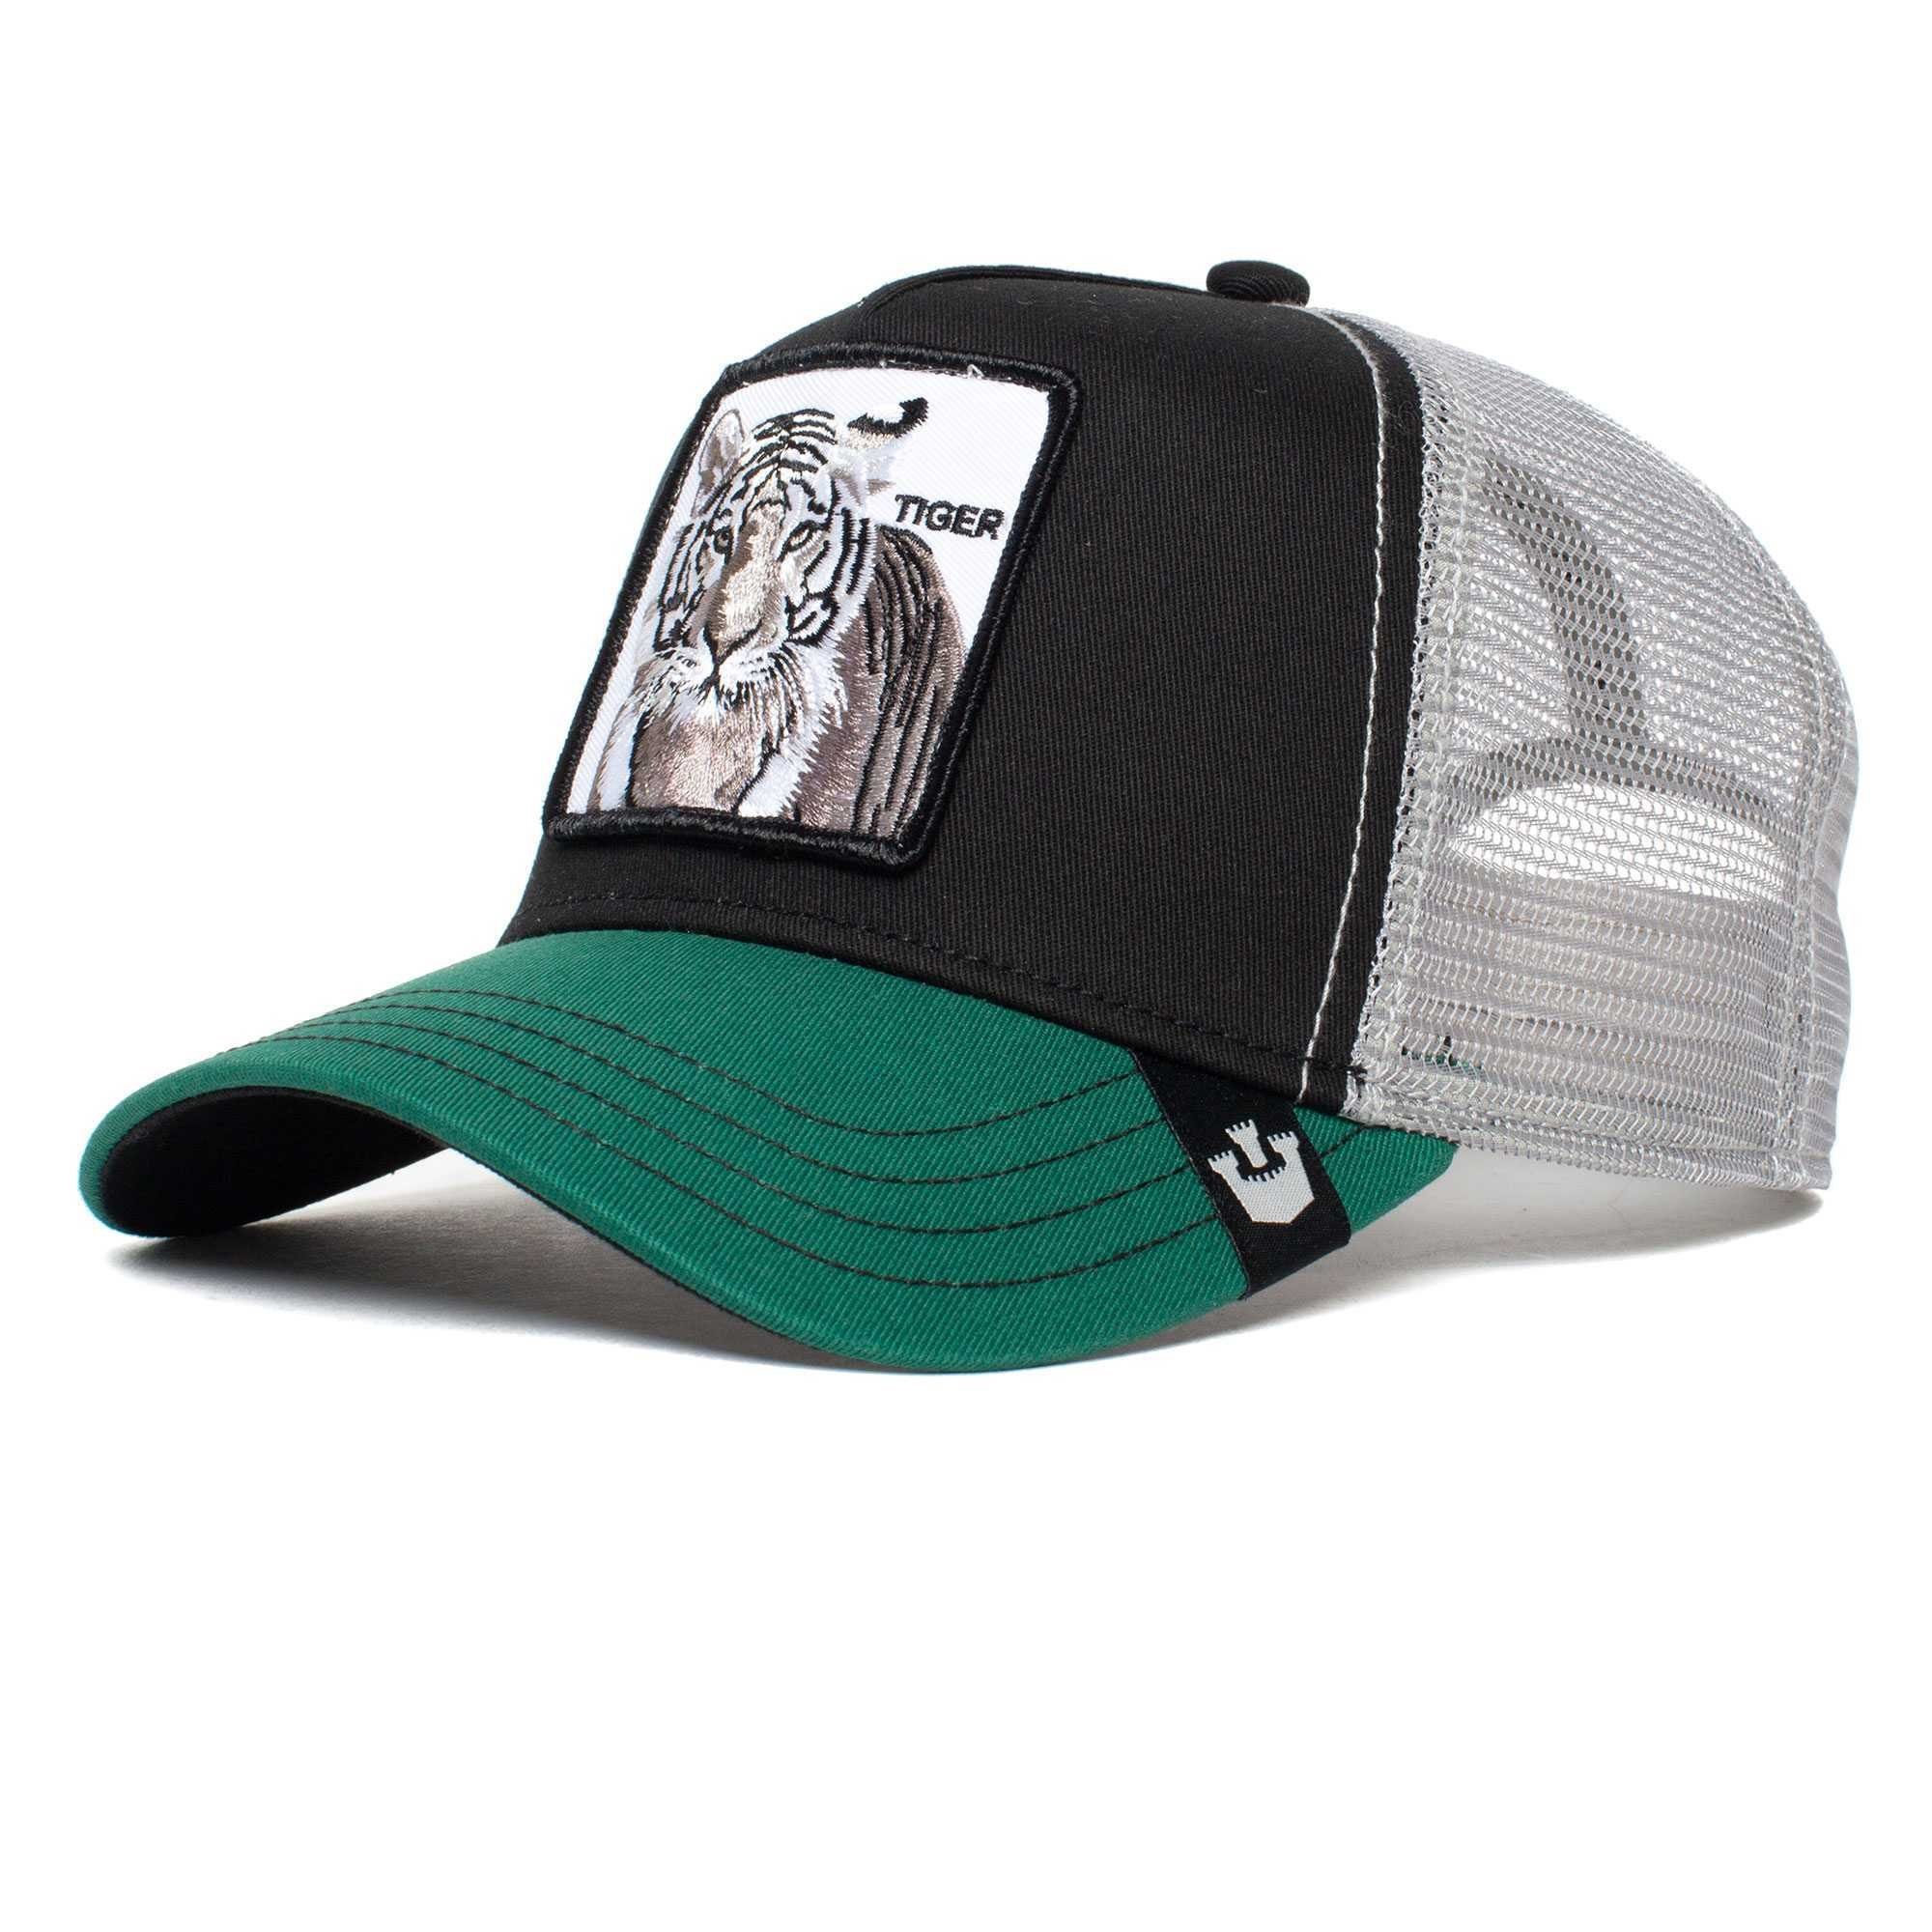 Cap Cap One Size Unisex Trucker - Tiger GOORIN Baseball Bros. Kappe, Frontpatch, black/green The White